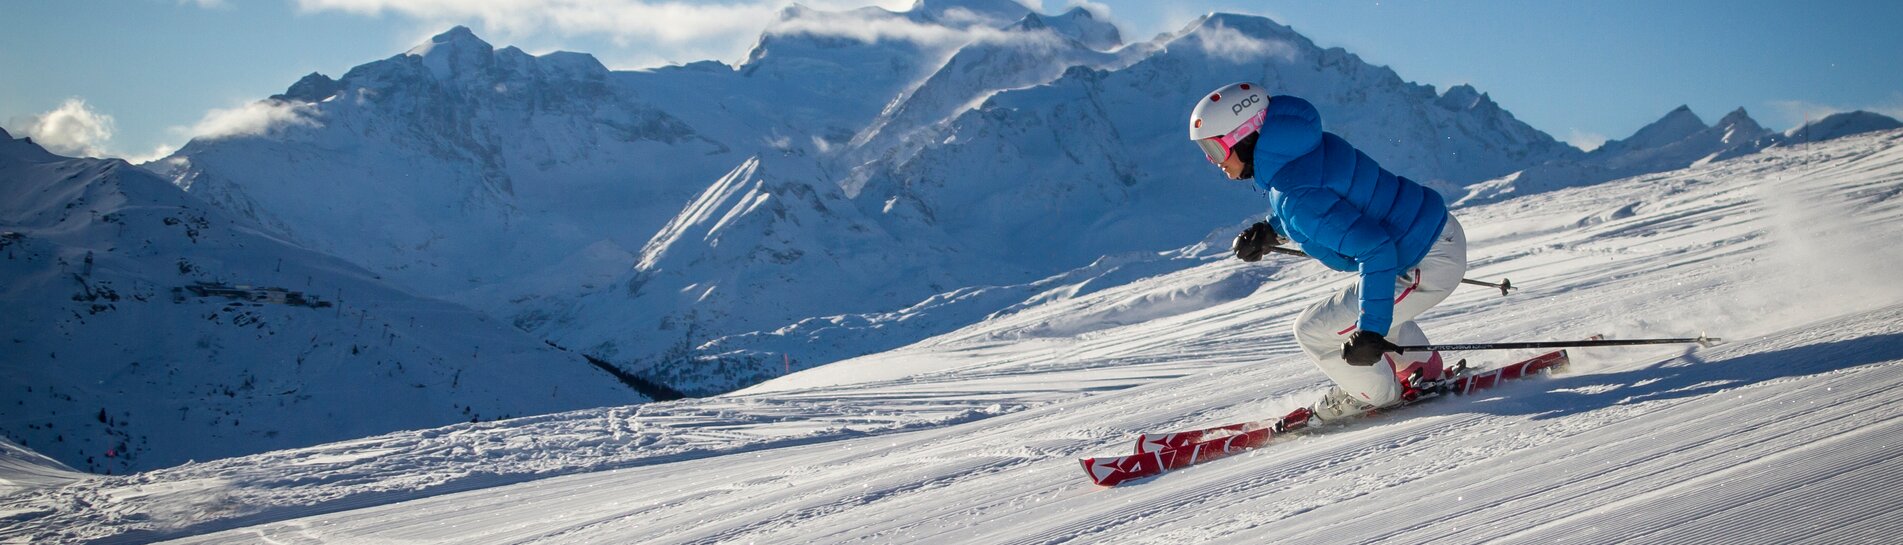 La Tzoumaz ski resort Switzerland